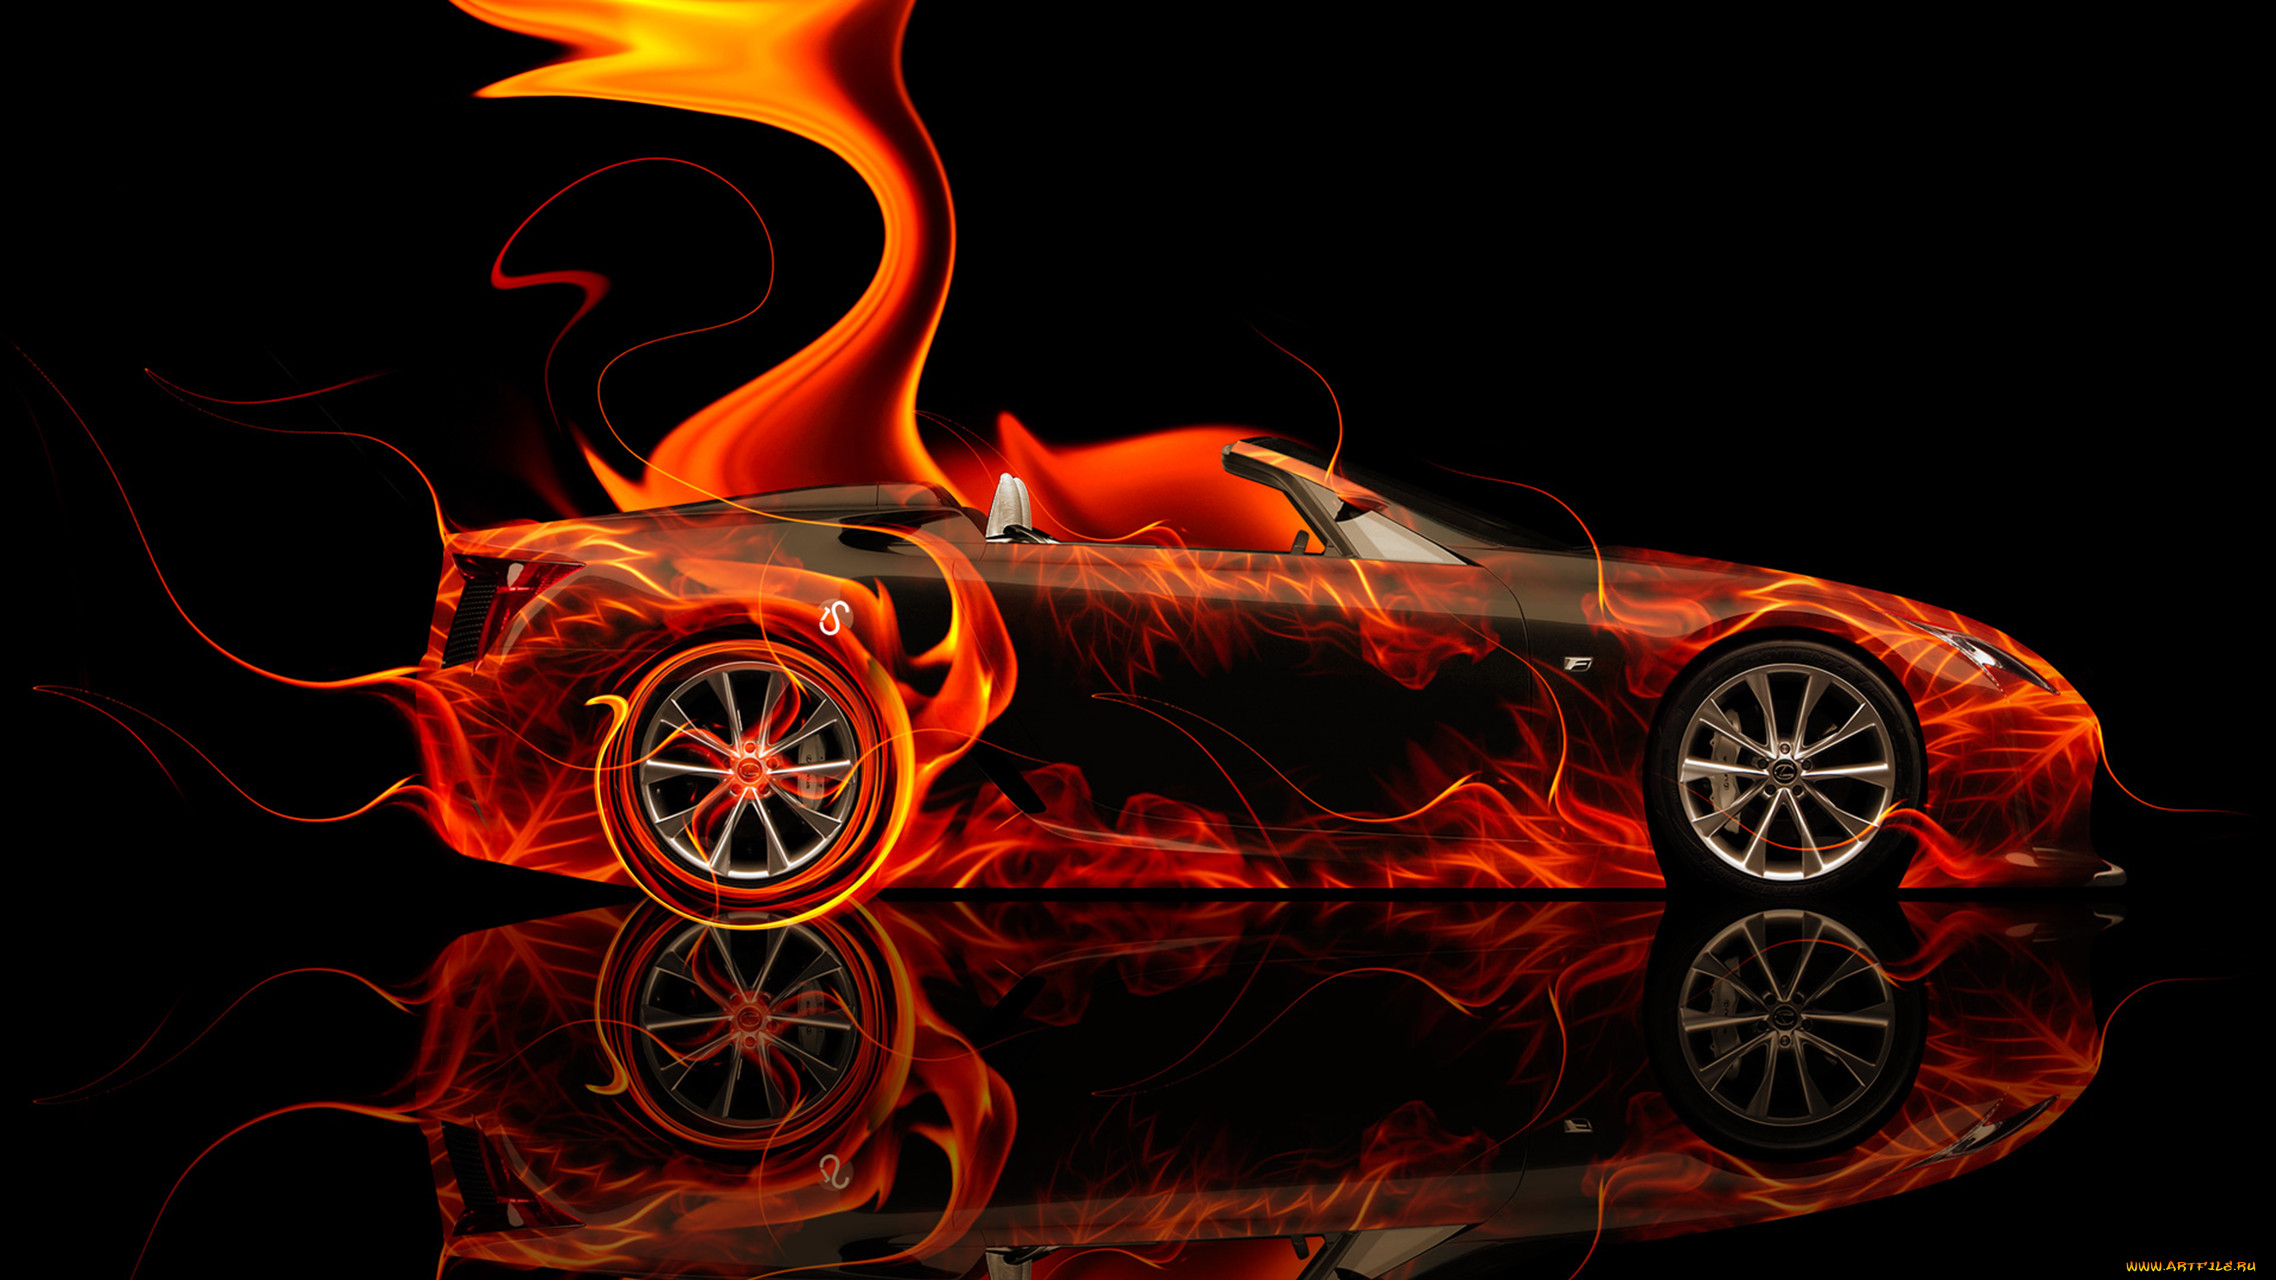 lexus lfa roadster side super fire abstract car 2014, , 3, lexus, lfa, roadster, side, super, fire, abstract, car, 2014